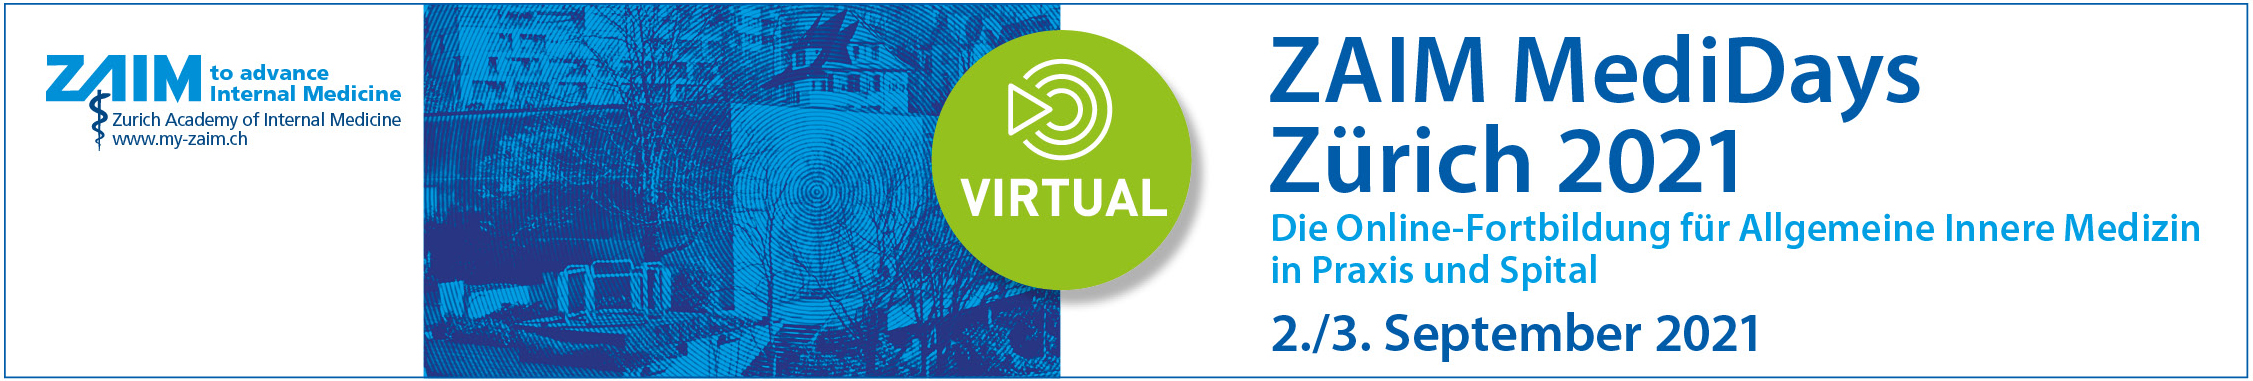 ZAIM MediDays 2021 Virtual